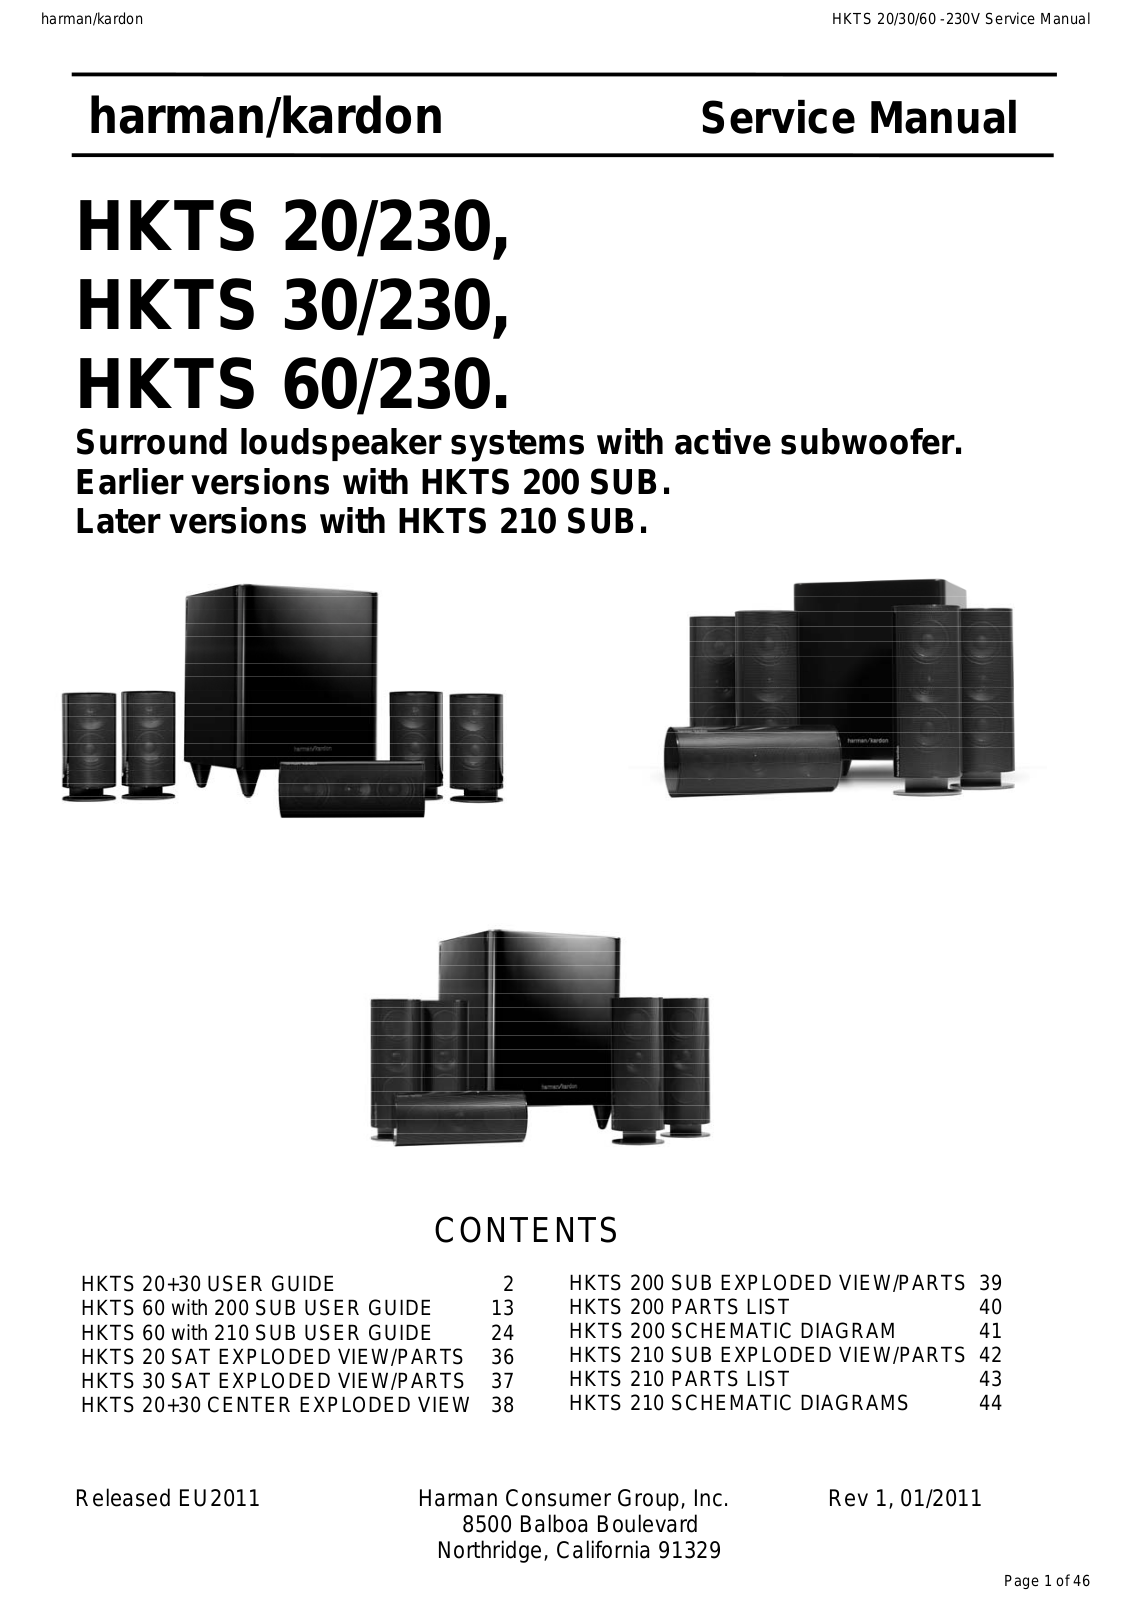 Harman Kardon HKTS 20, HKTS 30, HKTS 60 Service manual rev.1